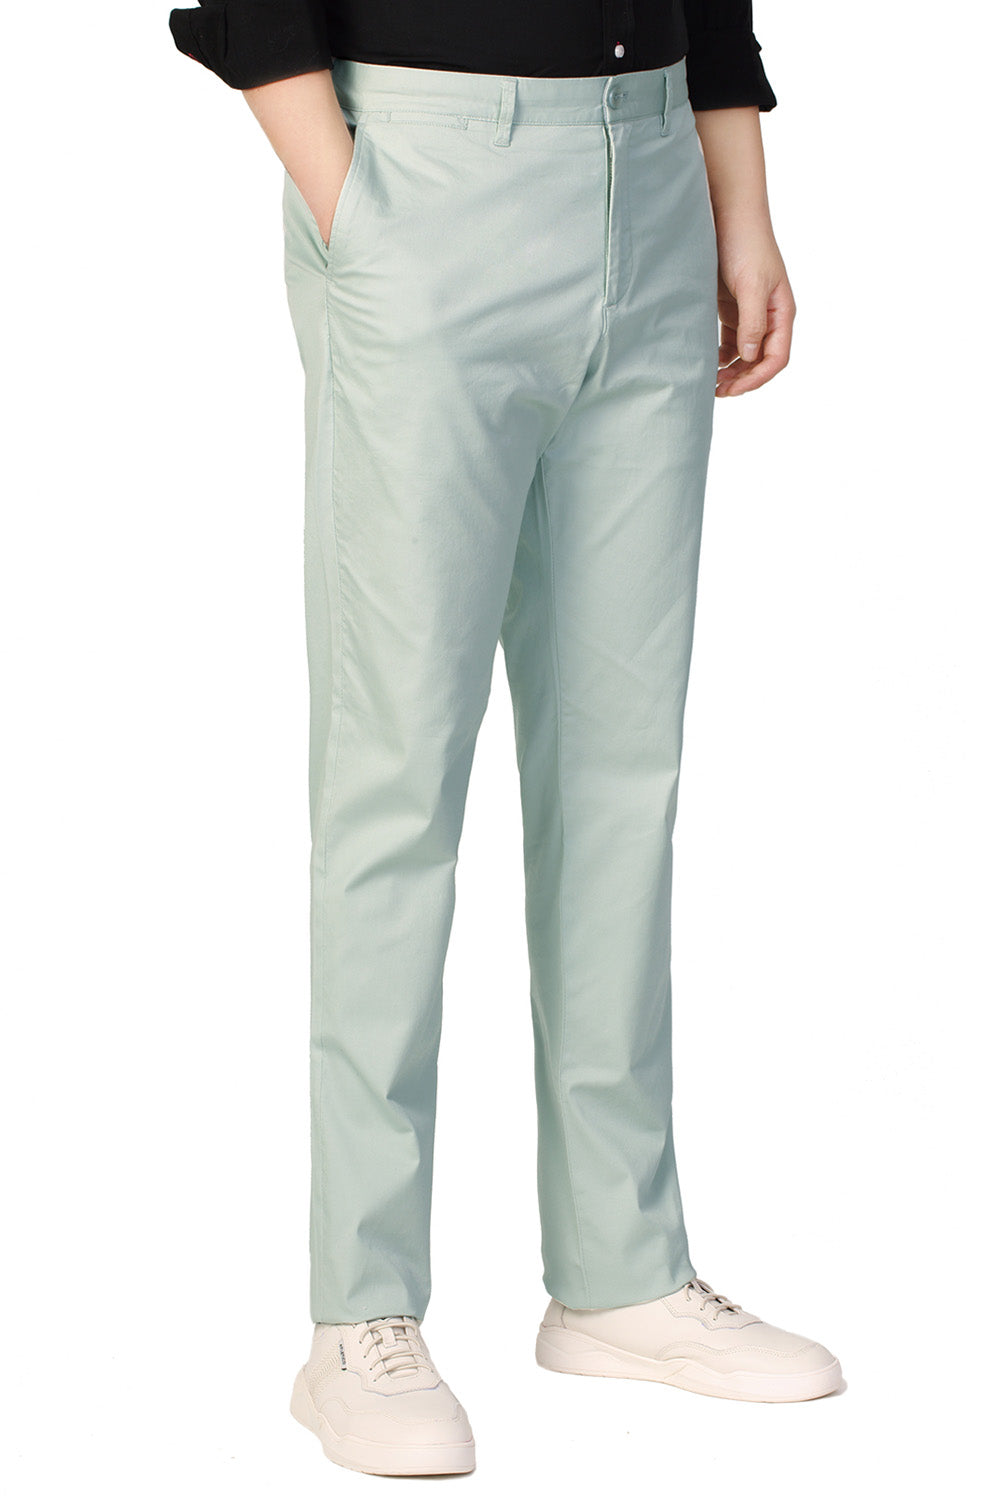 P&L Men's Straight Fit Comfort Stretch Flat Front Pants